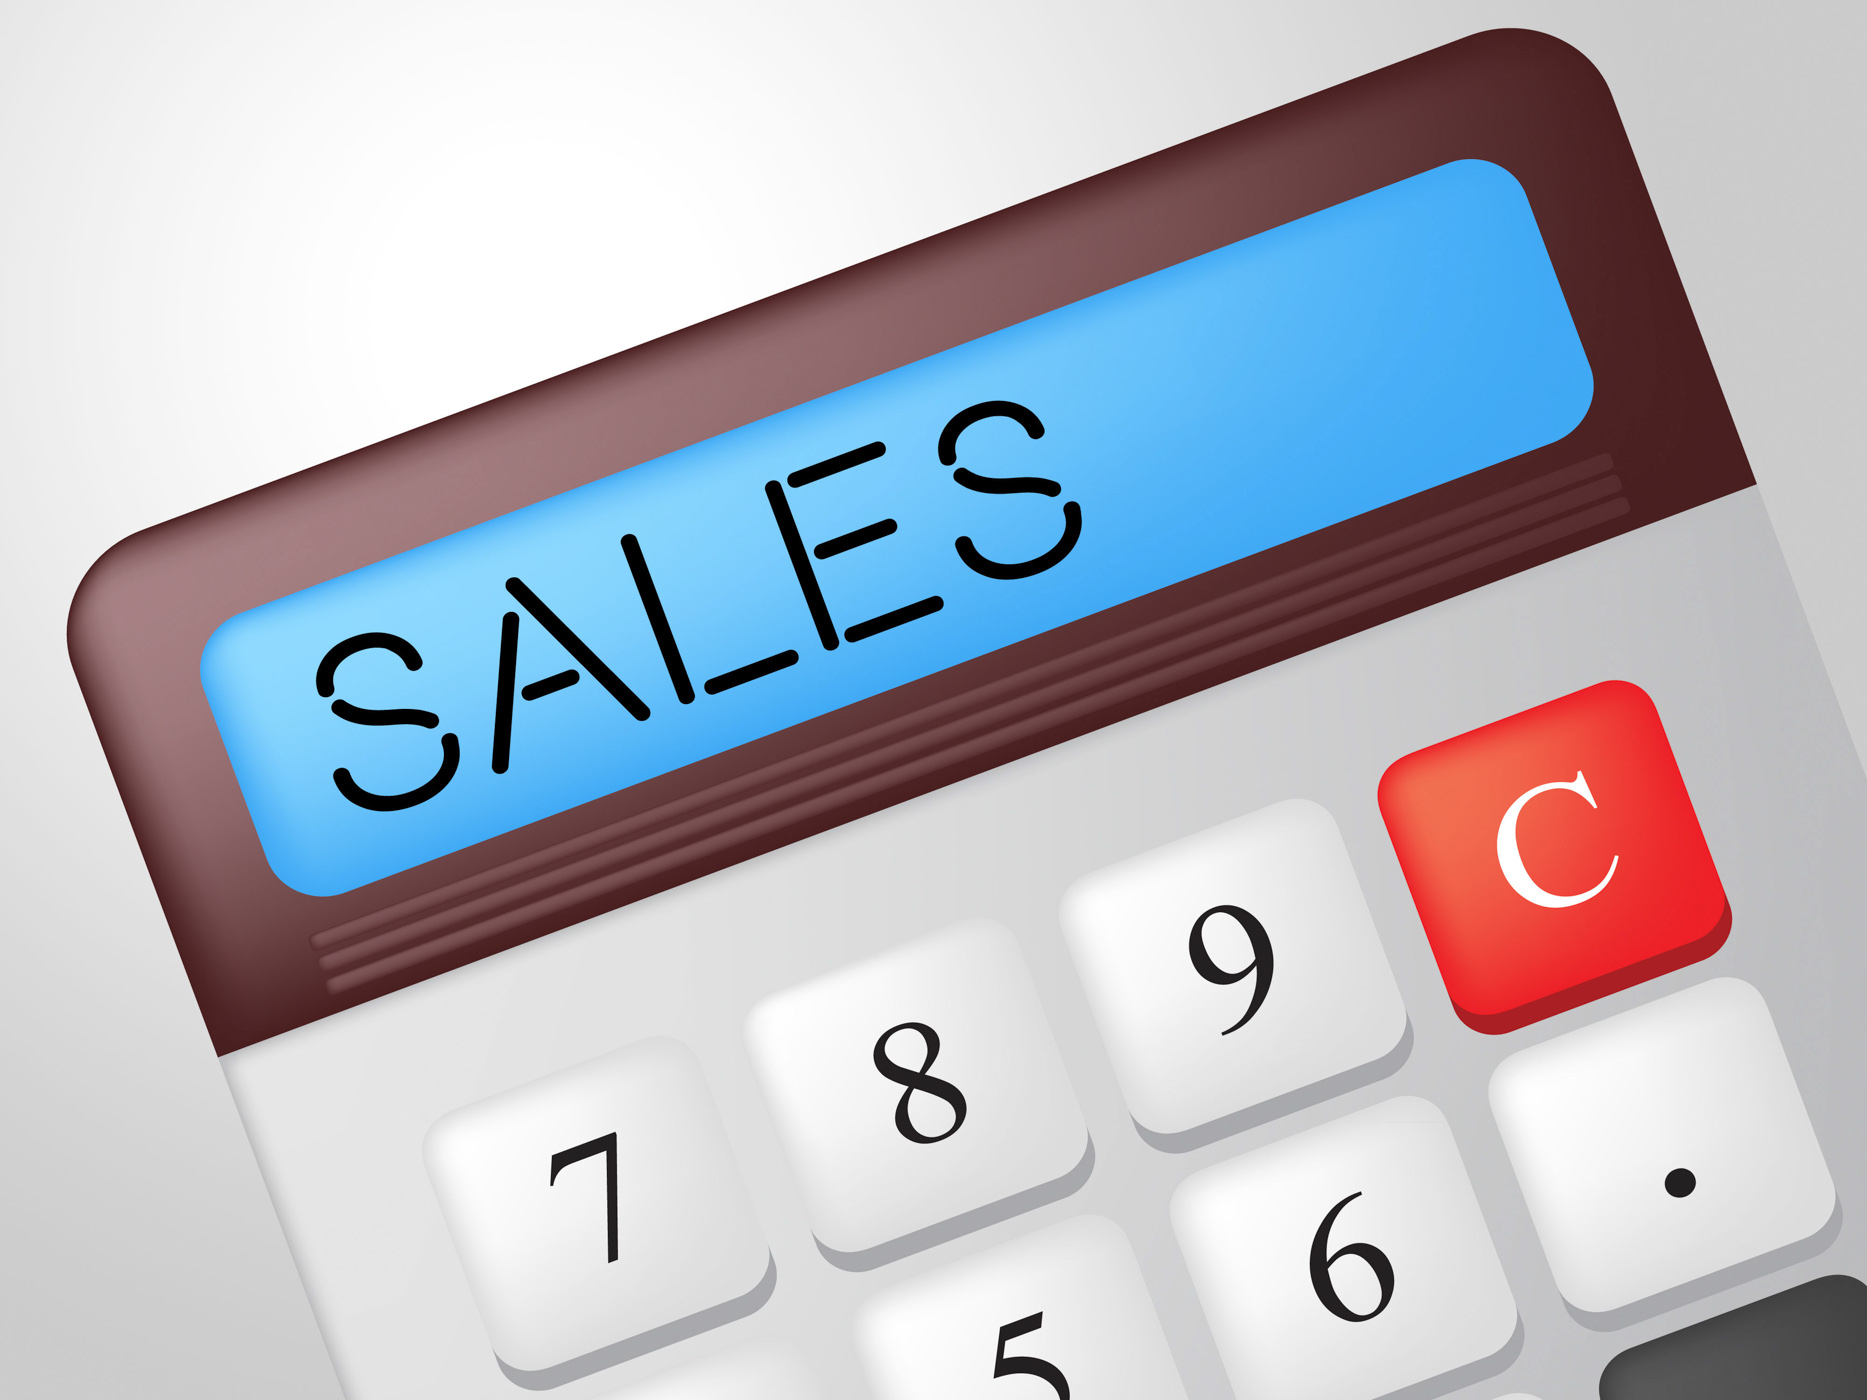 Sales calculator indicates market calculate and marketing photo